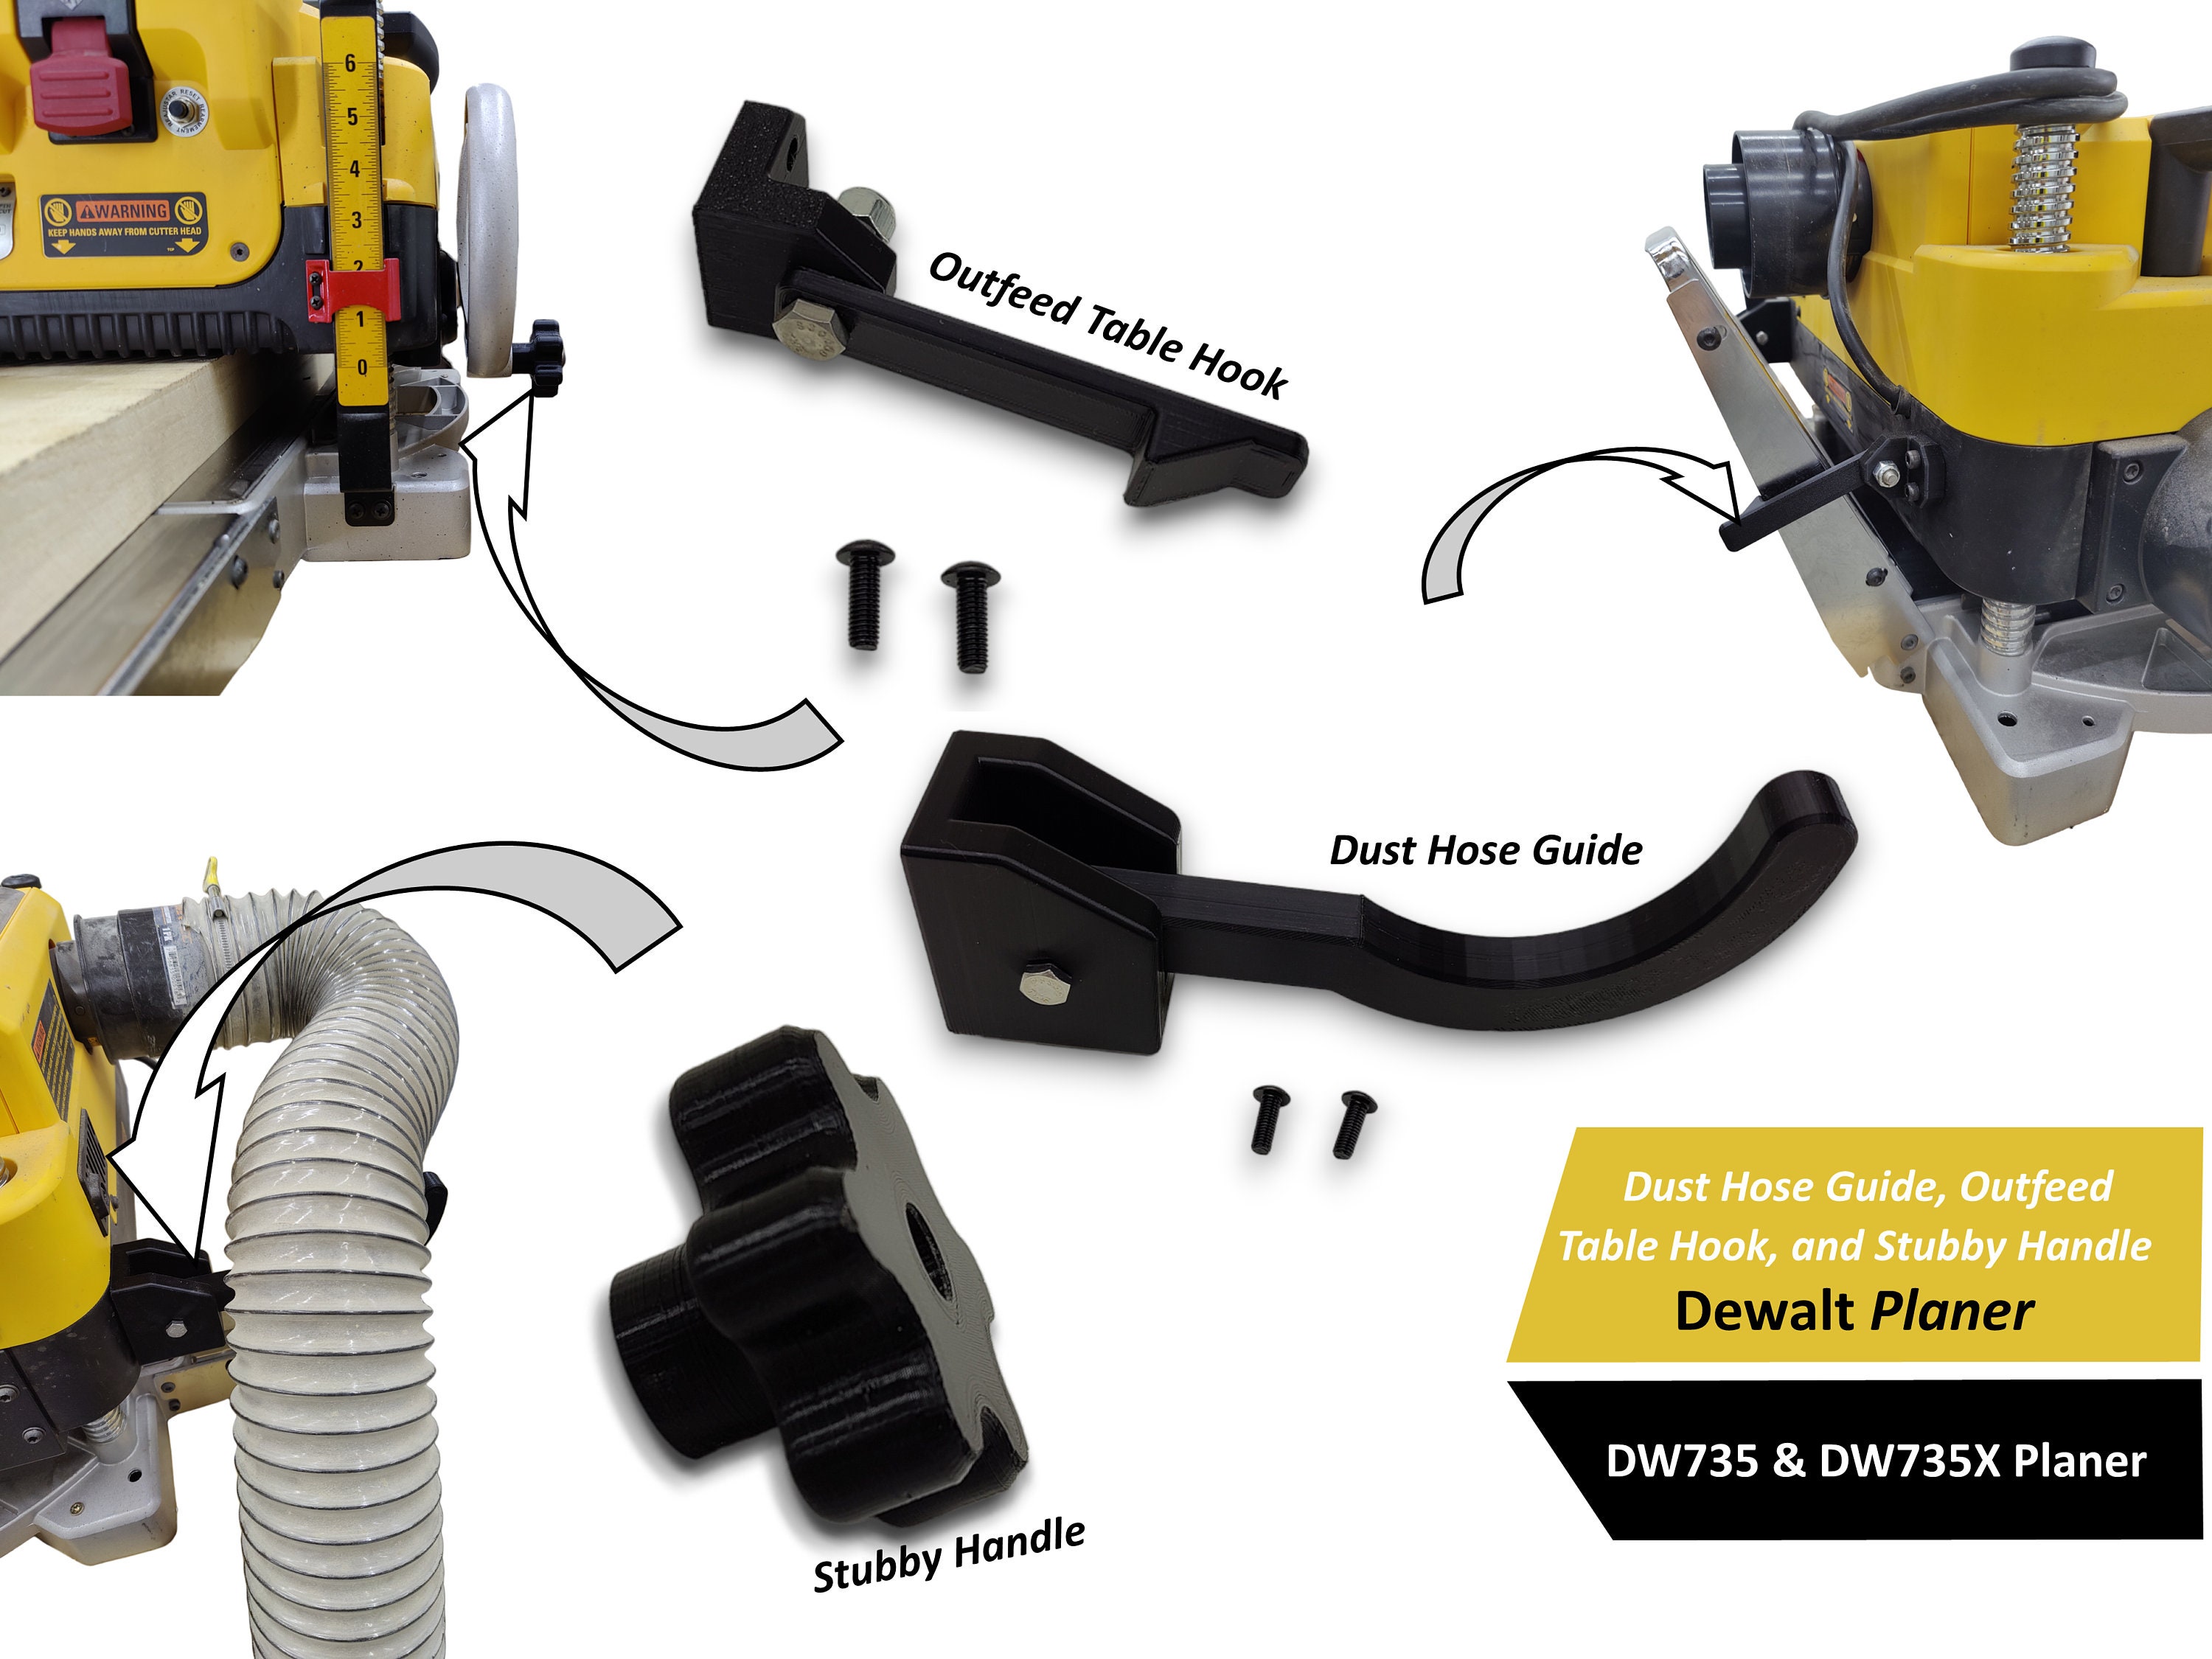 Dewalt Dw735/735x Planer Vacuum Adapter for Ridgid & All 2.5 Shop Vac Hoses  Reinforced Design Stronger Than Original 